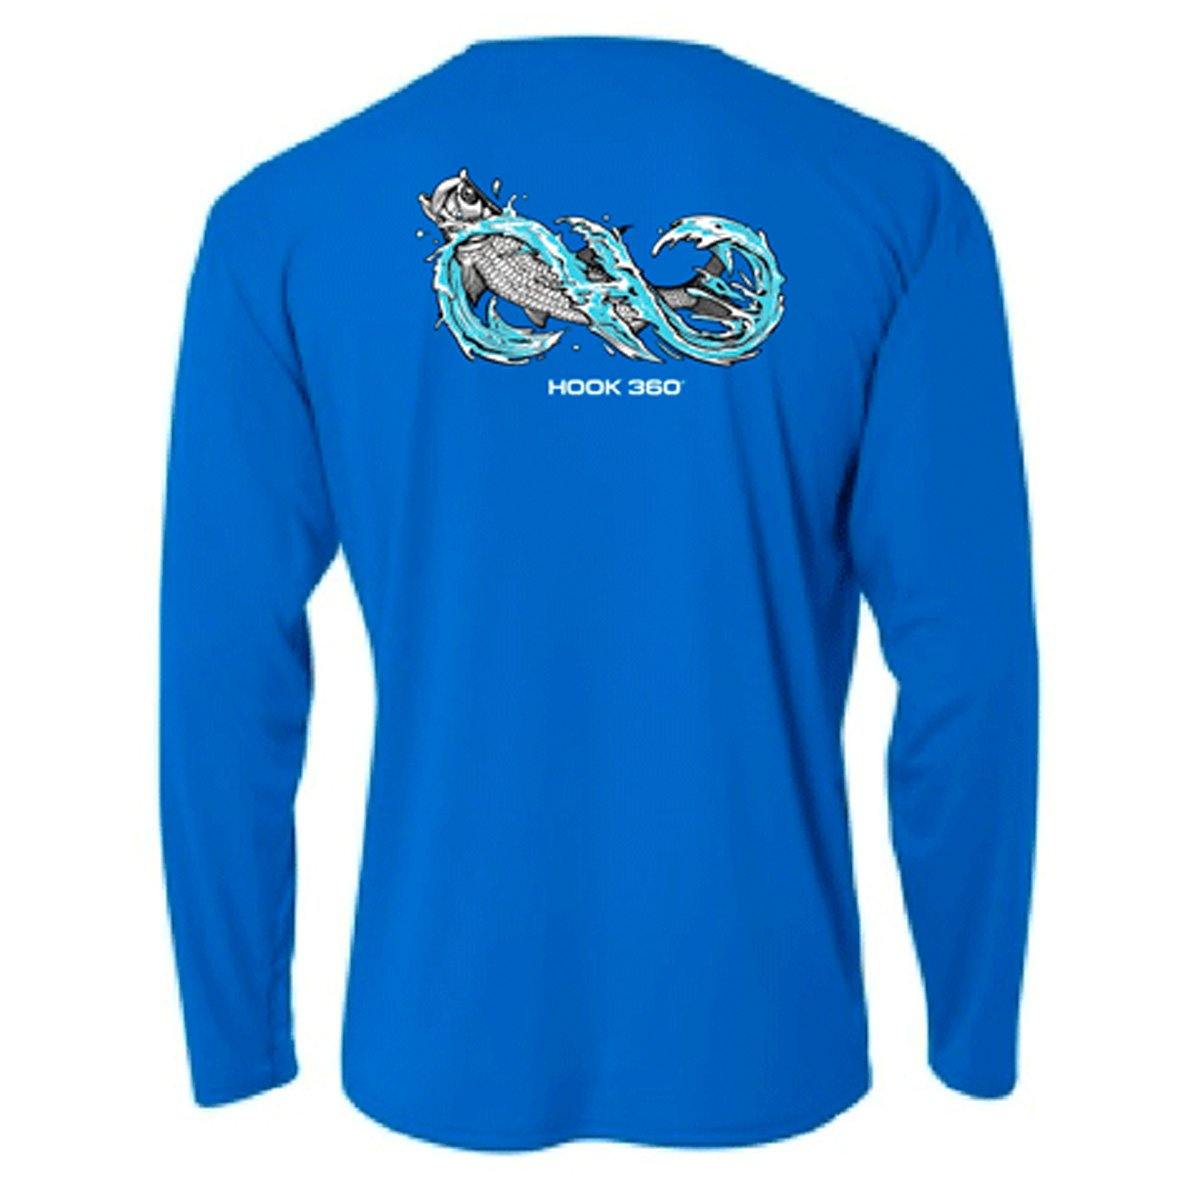 Buy Performance Fishing Shirts, tarpon fishing shirts Design | HOOK 360°